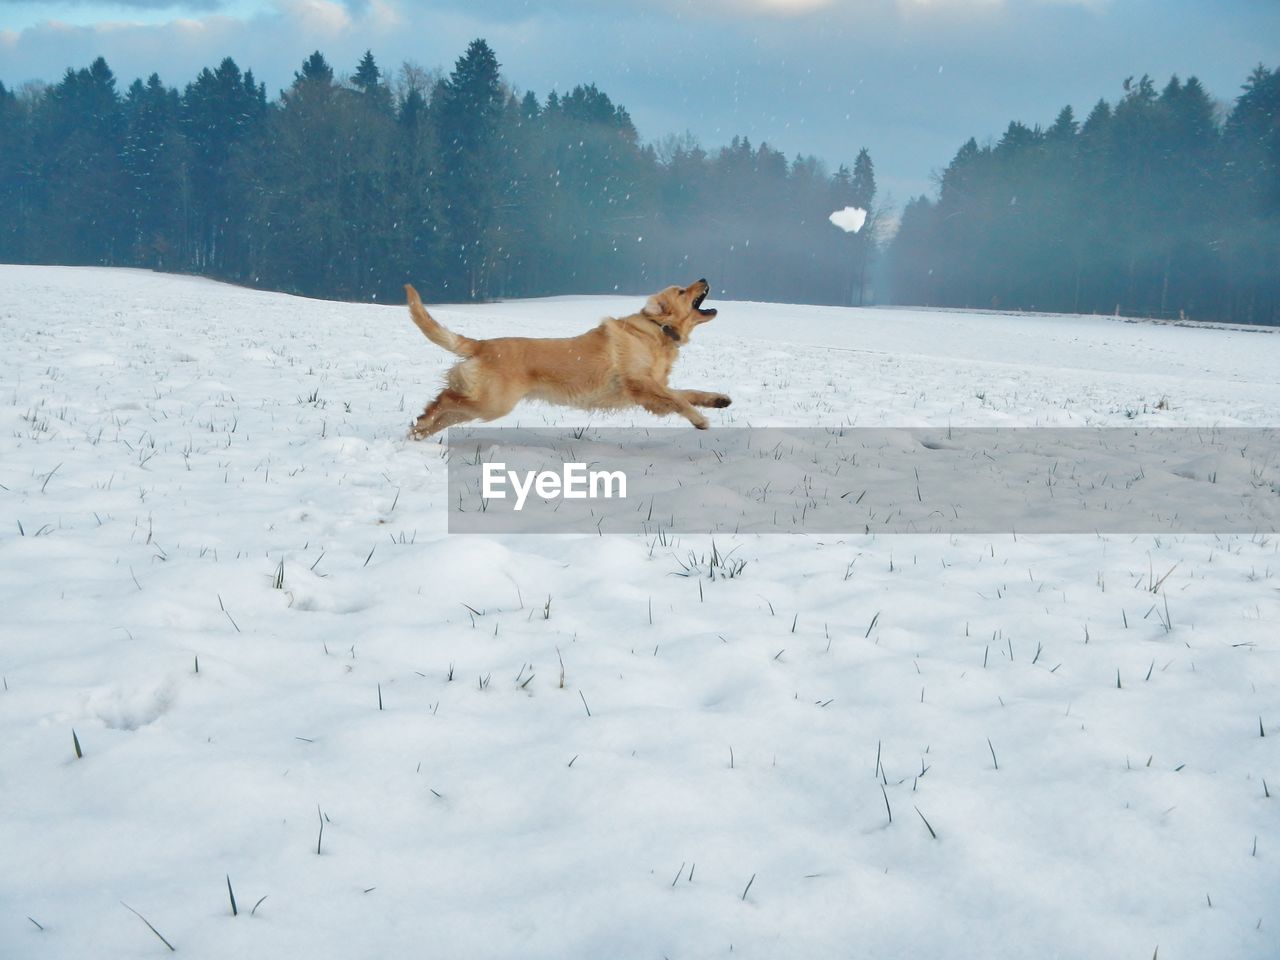 Dog running on snowy field against sky during snowfall